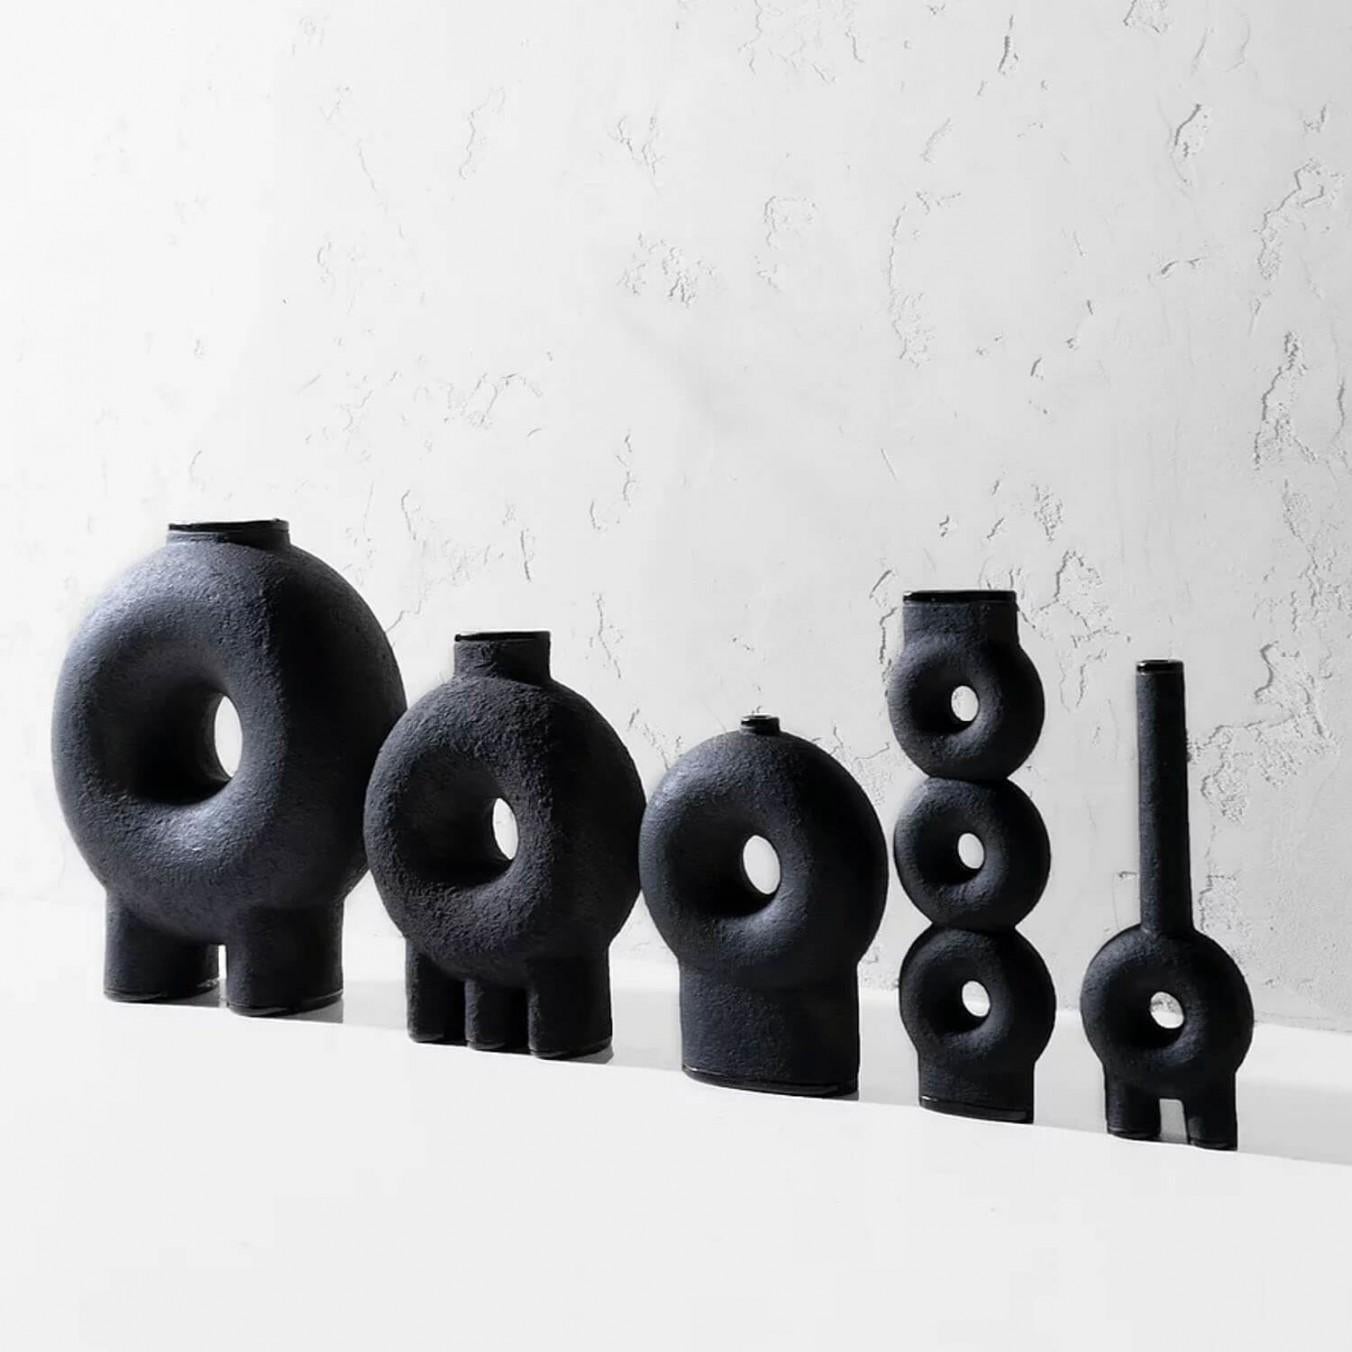 Clay Sculpted Ceramic Vase by FAINA